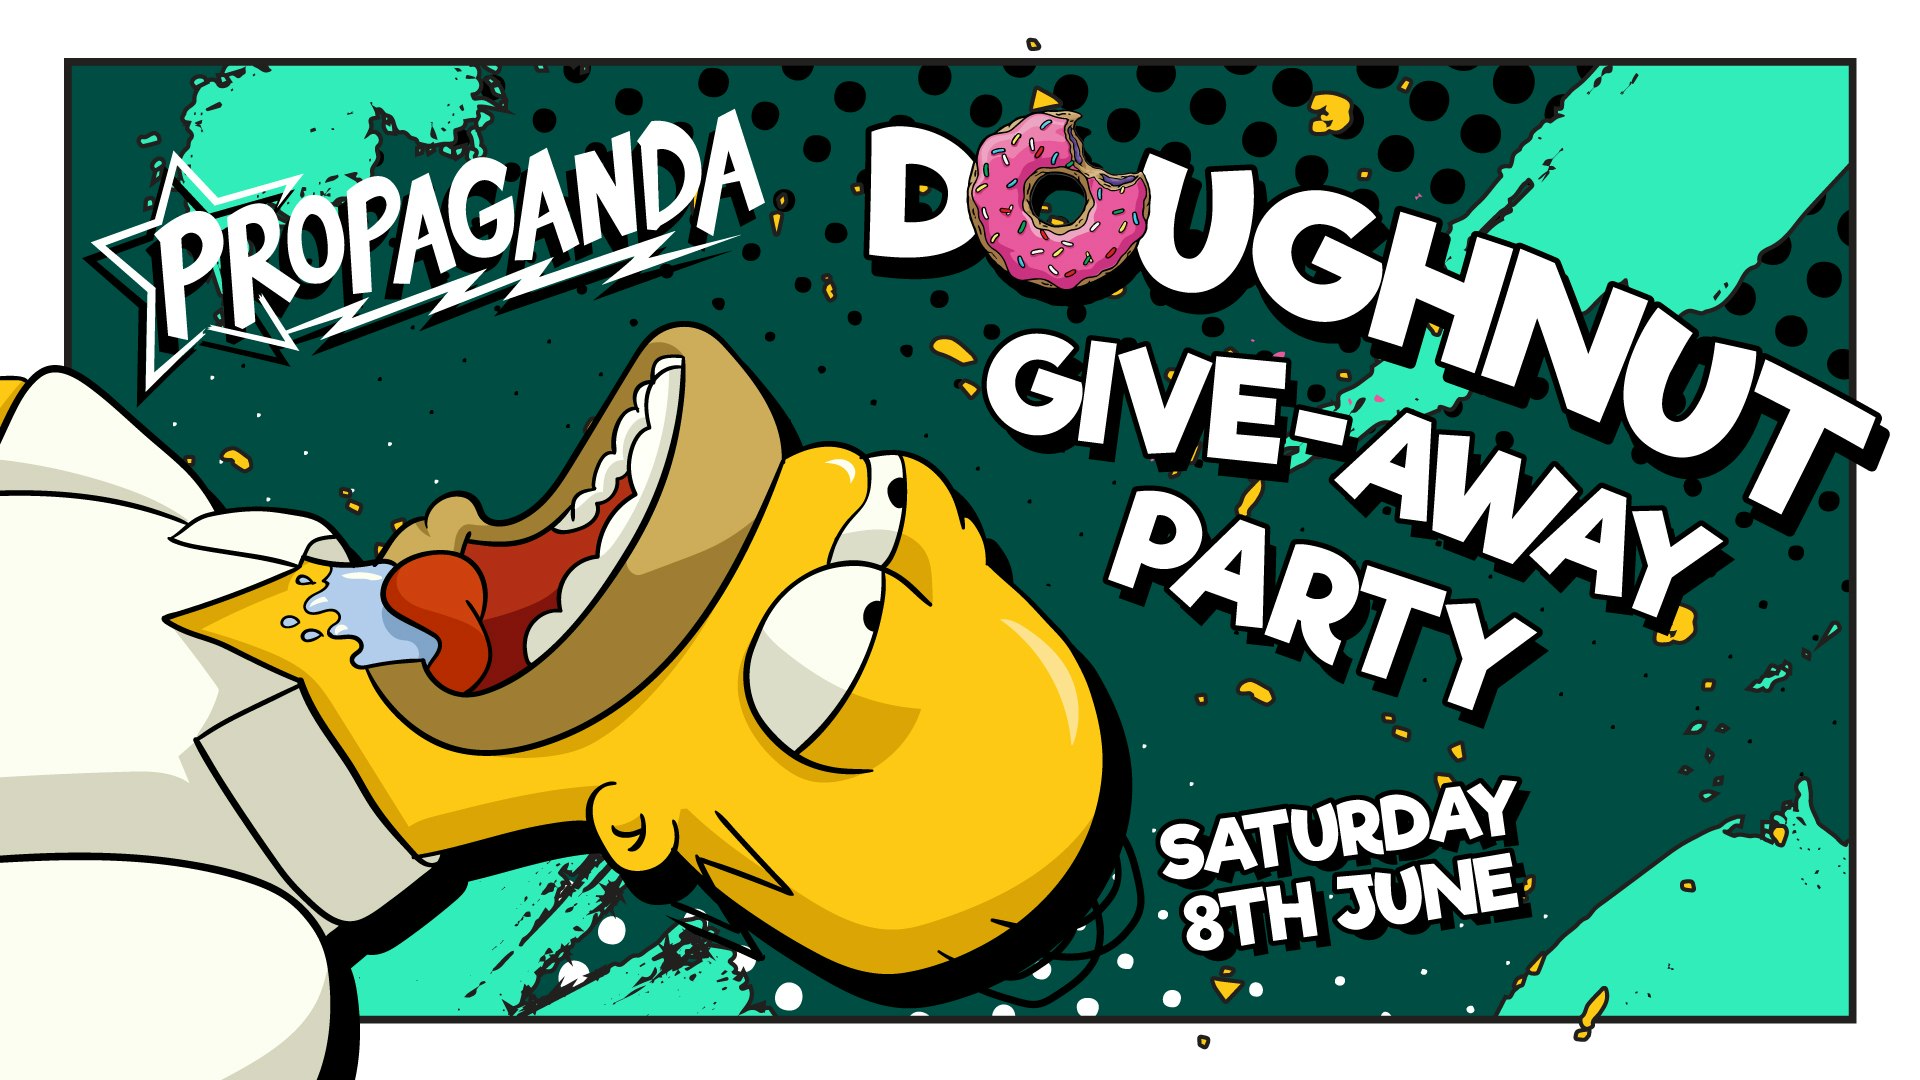 Propaganda Bristol – Doughnut Party